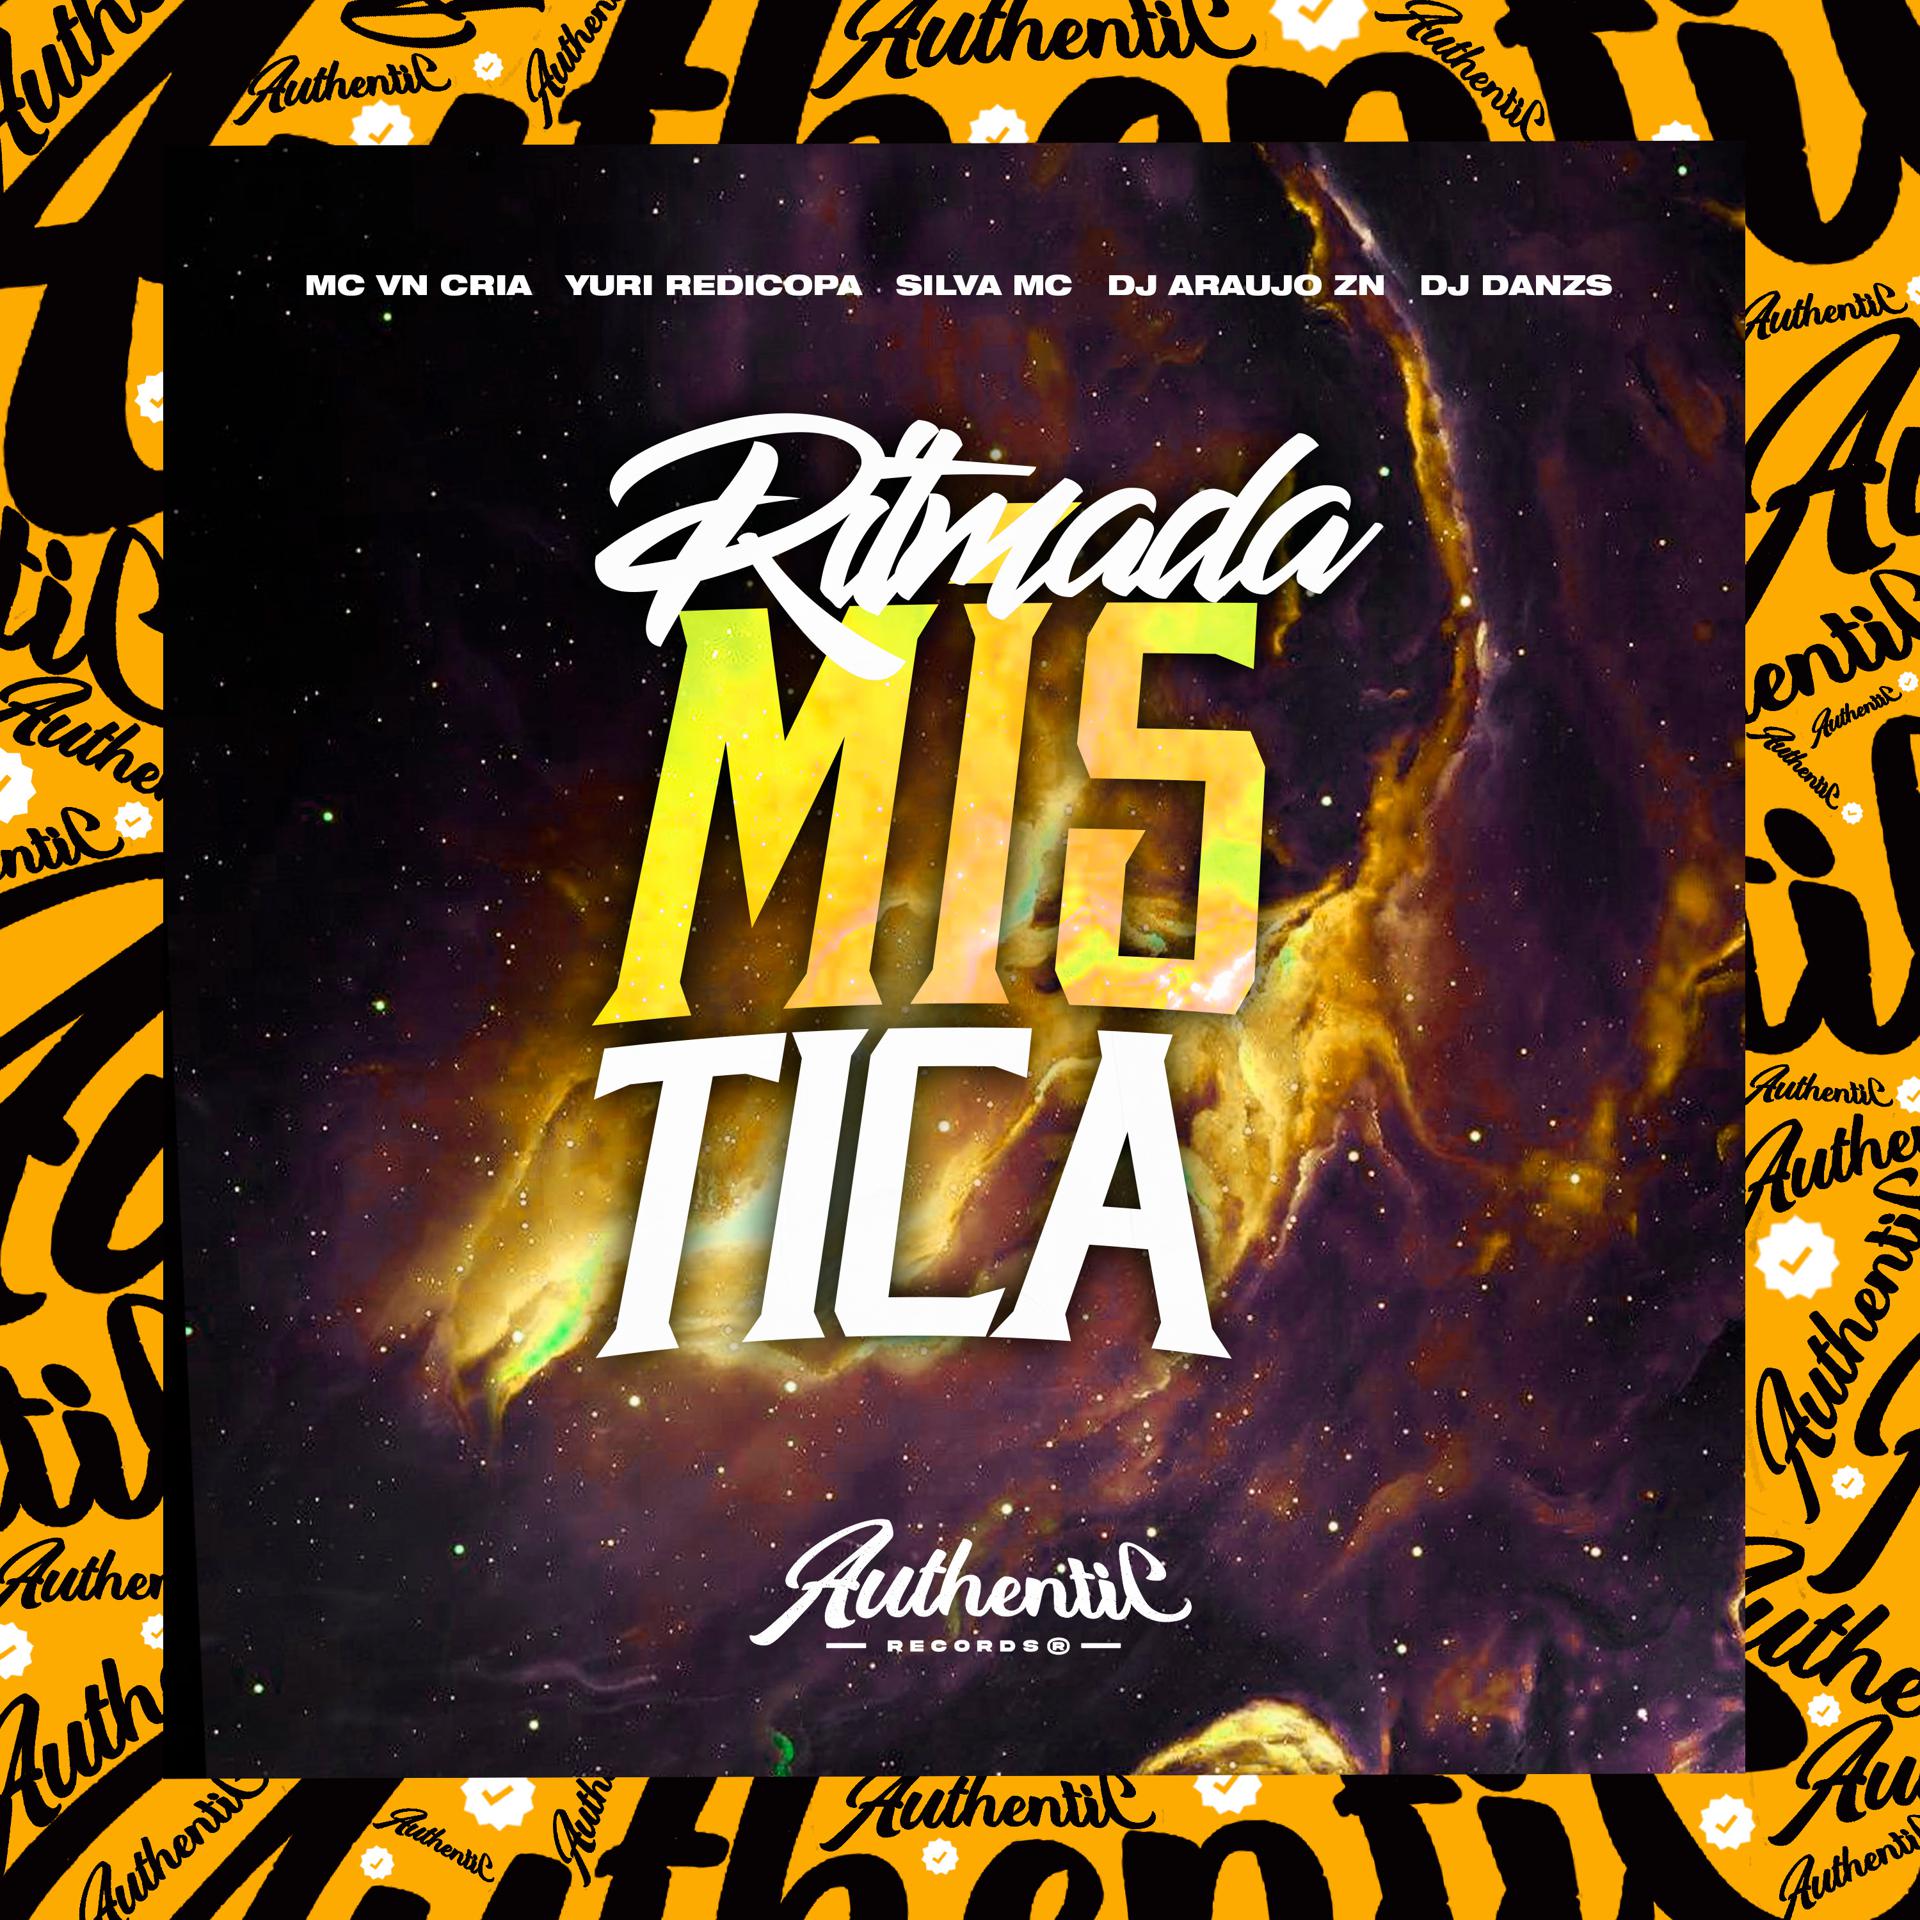 Постер альбома Ritmada Mística